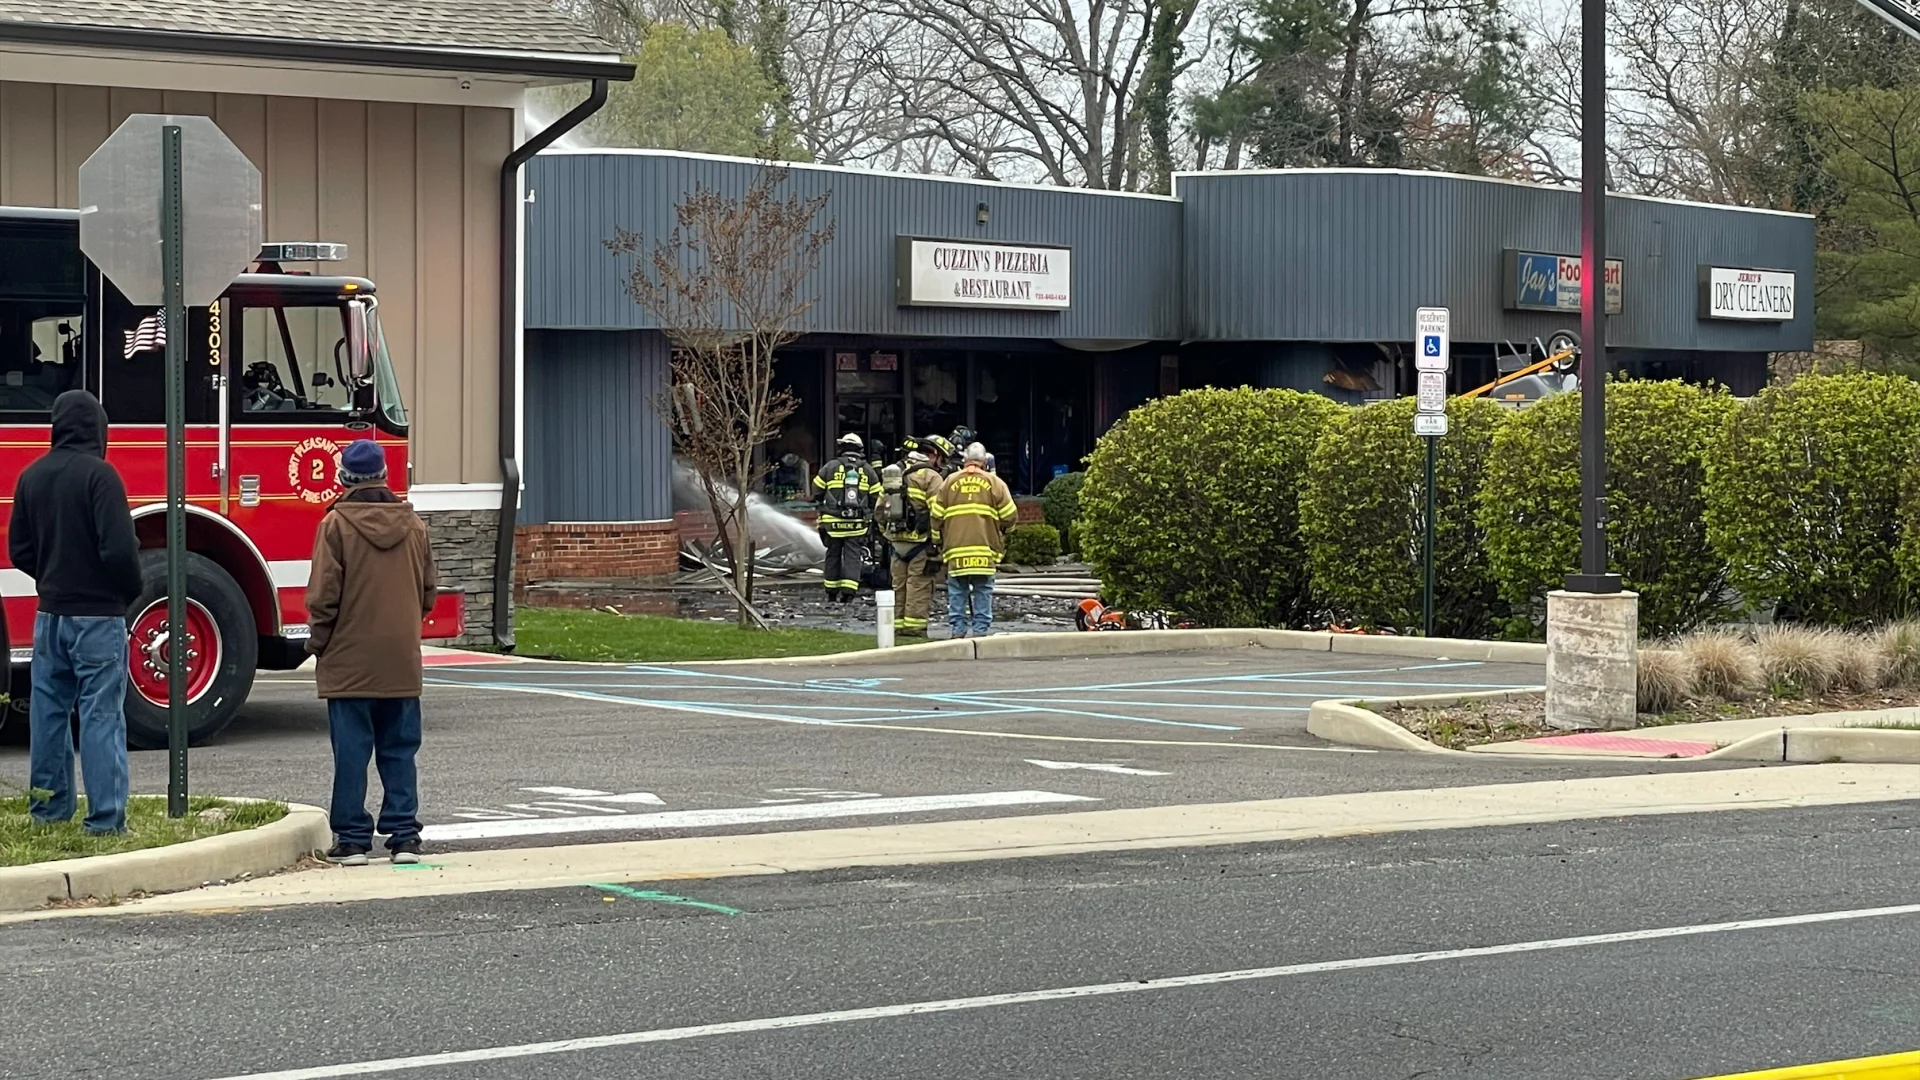 Officials: 3-alarm fire destroys 2 Brick Township strip mall businesses